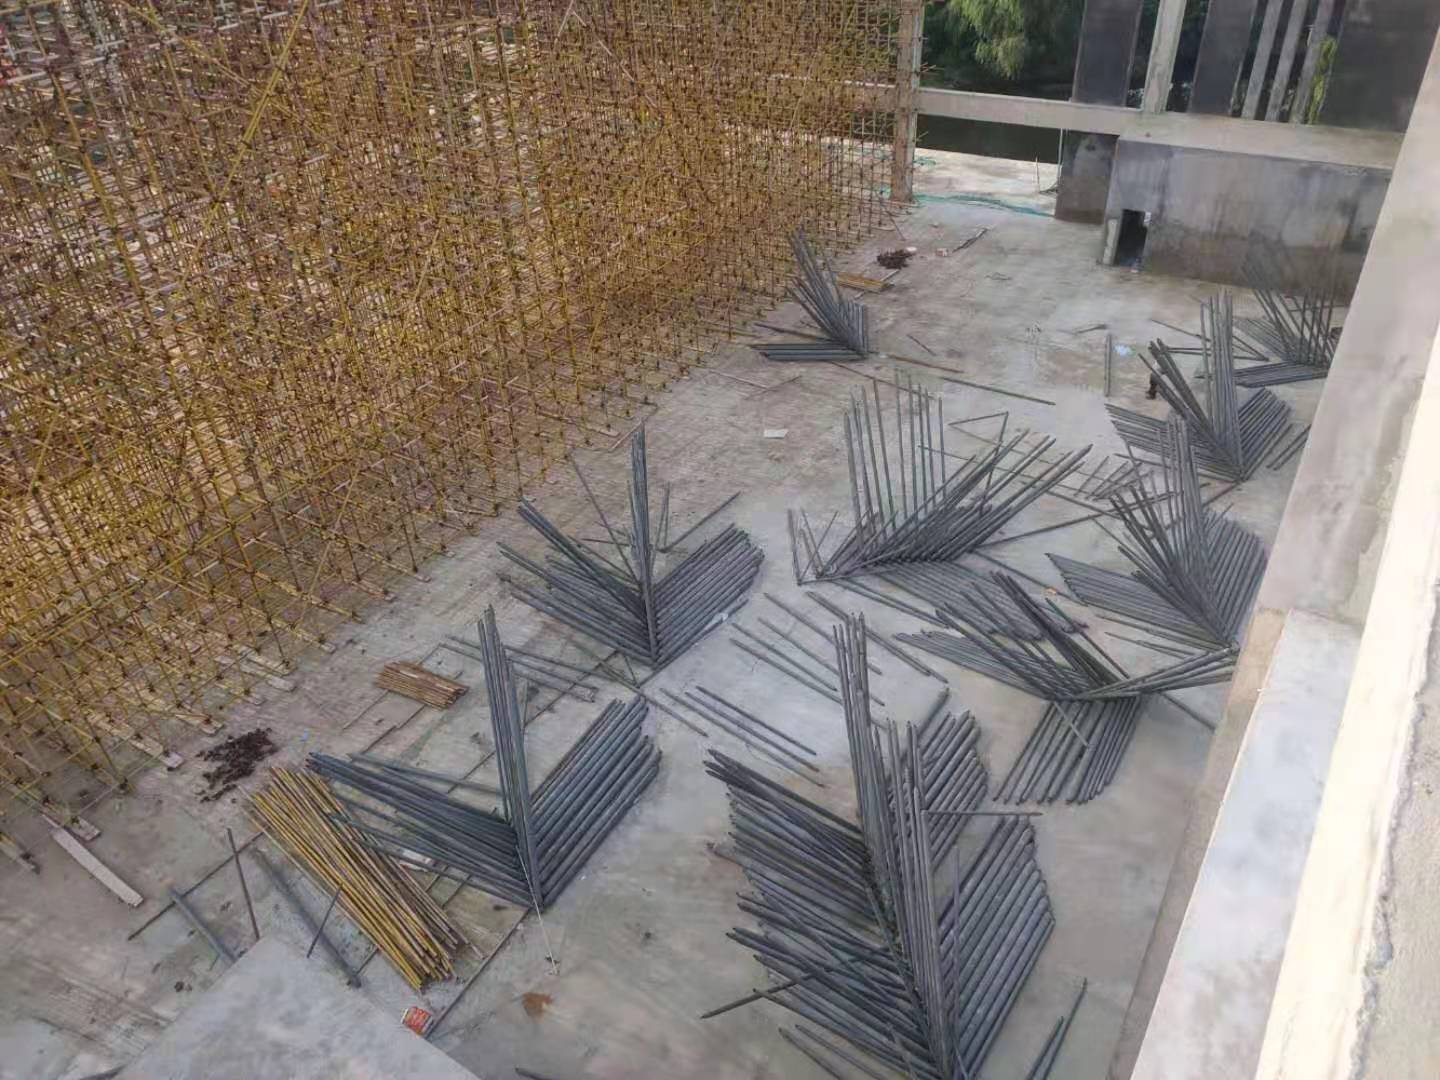 Grid Art Museum Project Construction